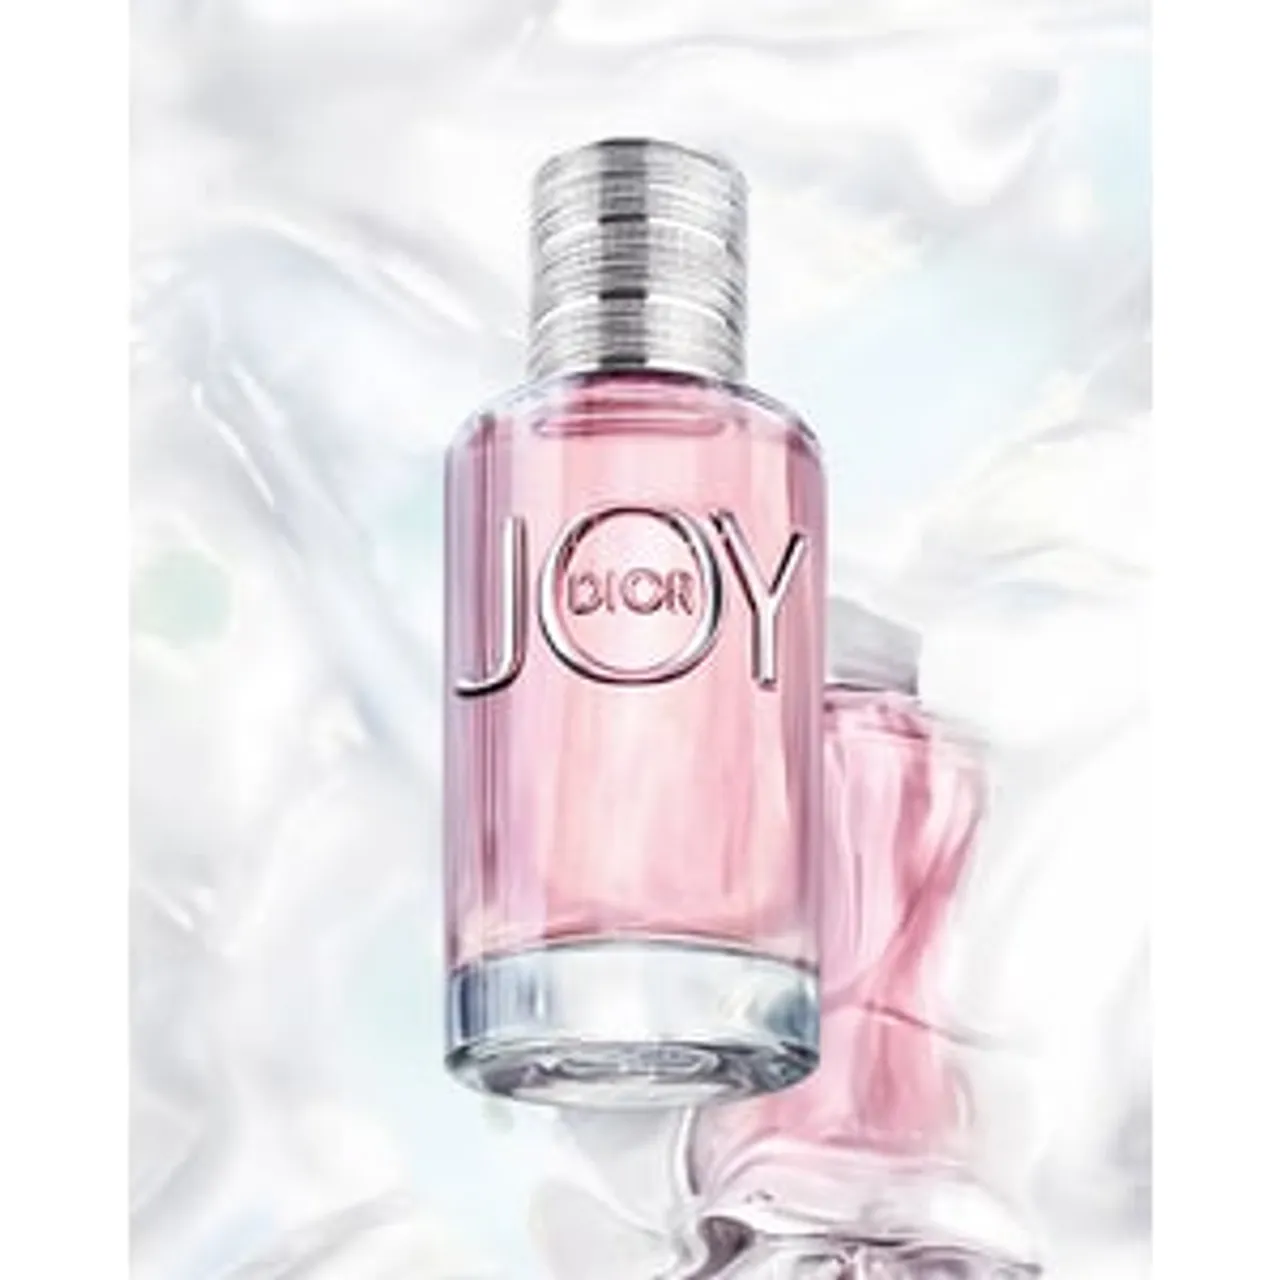 Dior Joy By Dior EAU DE PARFUM 50 ML